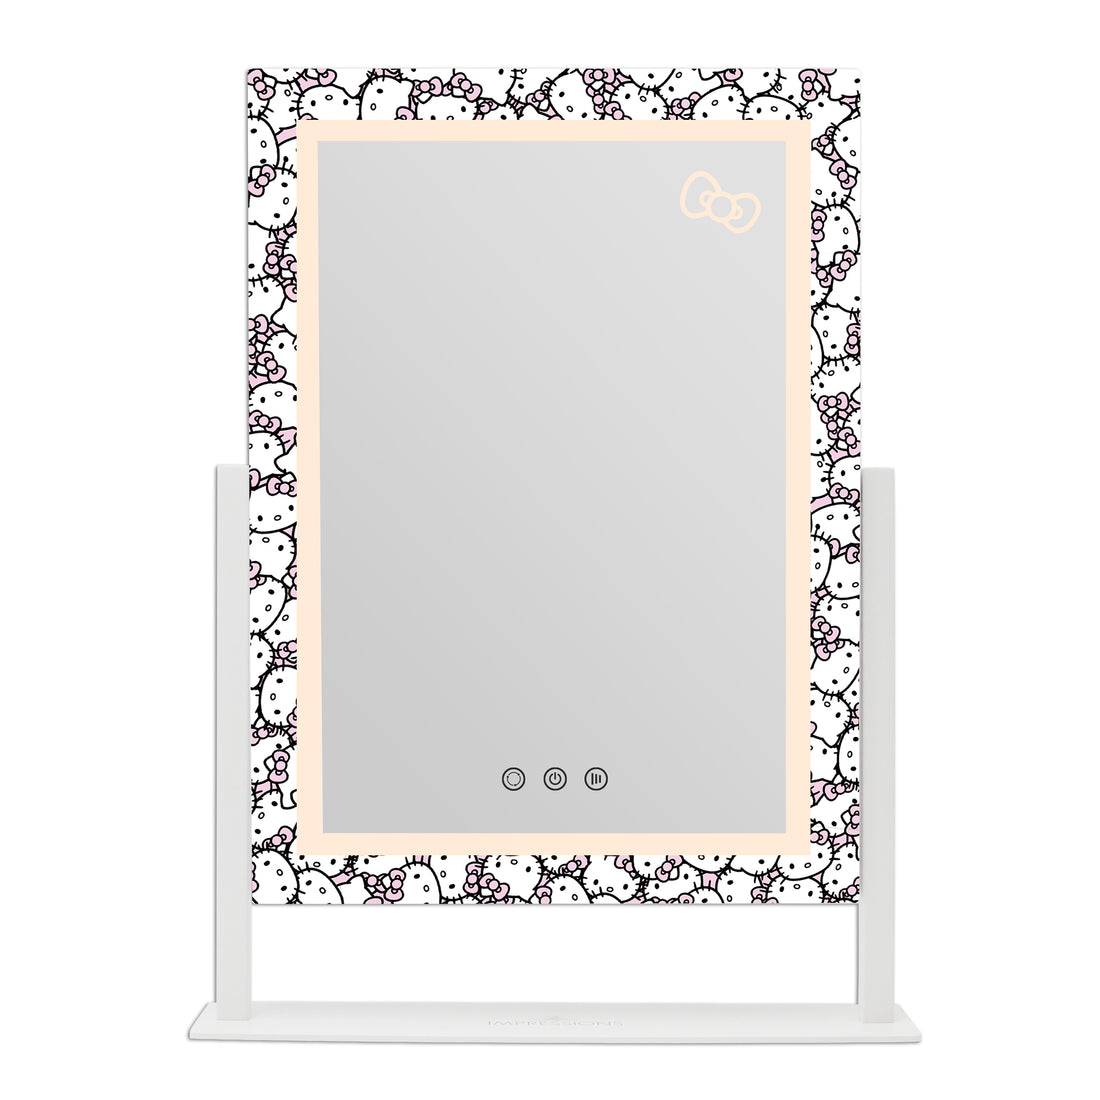  Impressions Vanity Hello Kitty LED Handheld Mirror, Makeup  Vanity Mirror with Standing Base and Adjustable Brightness